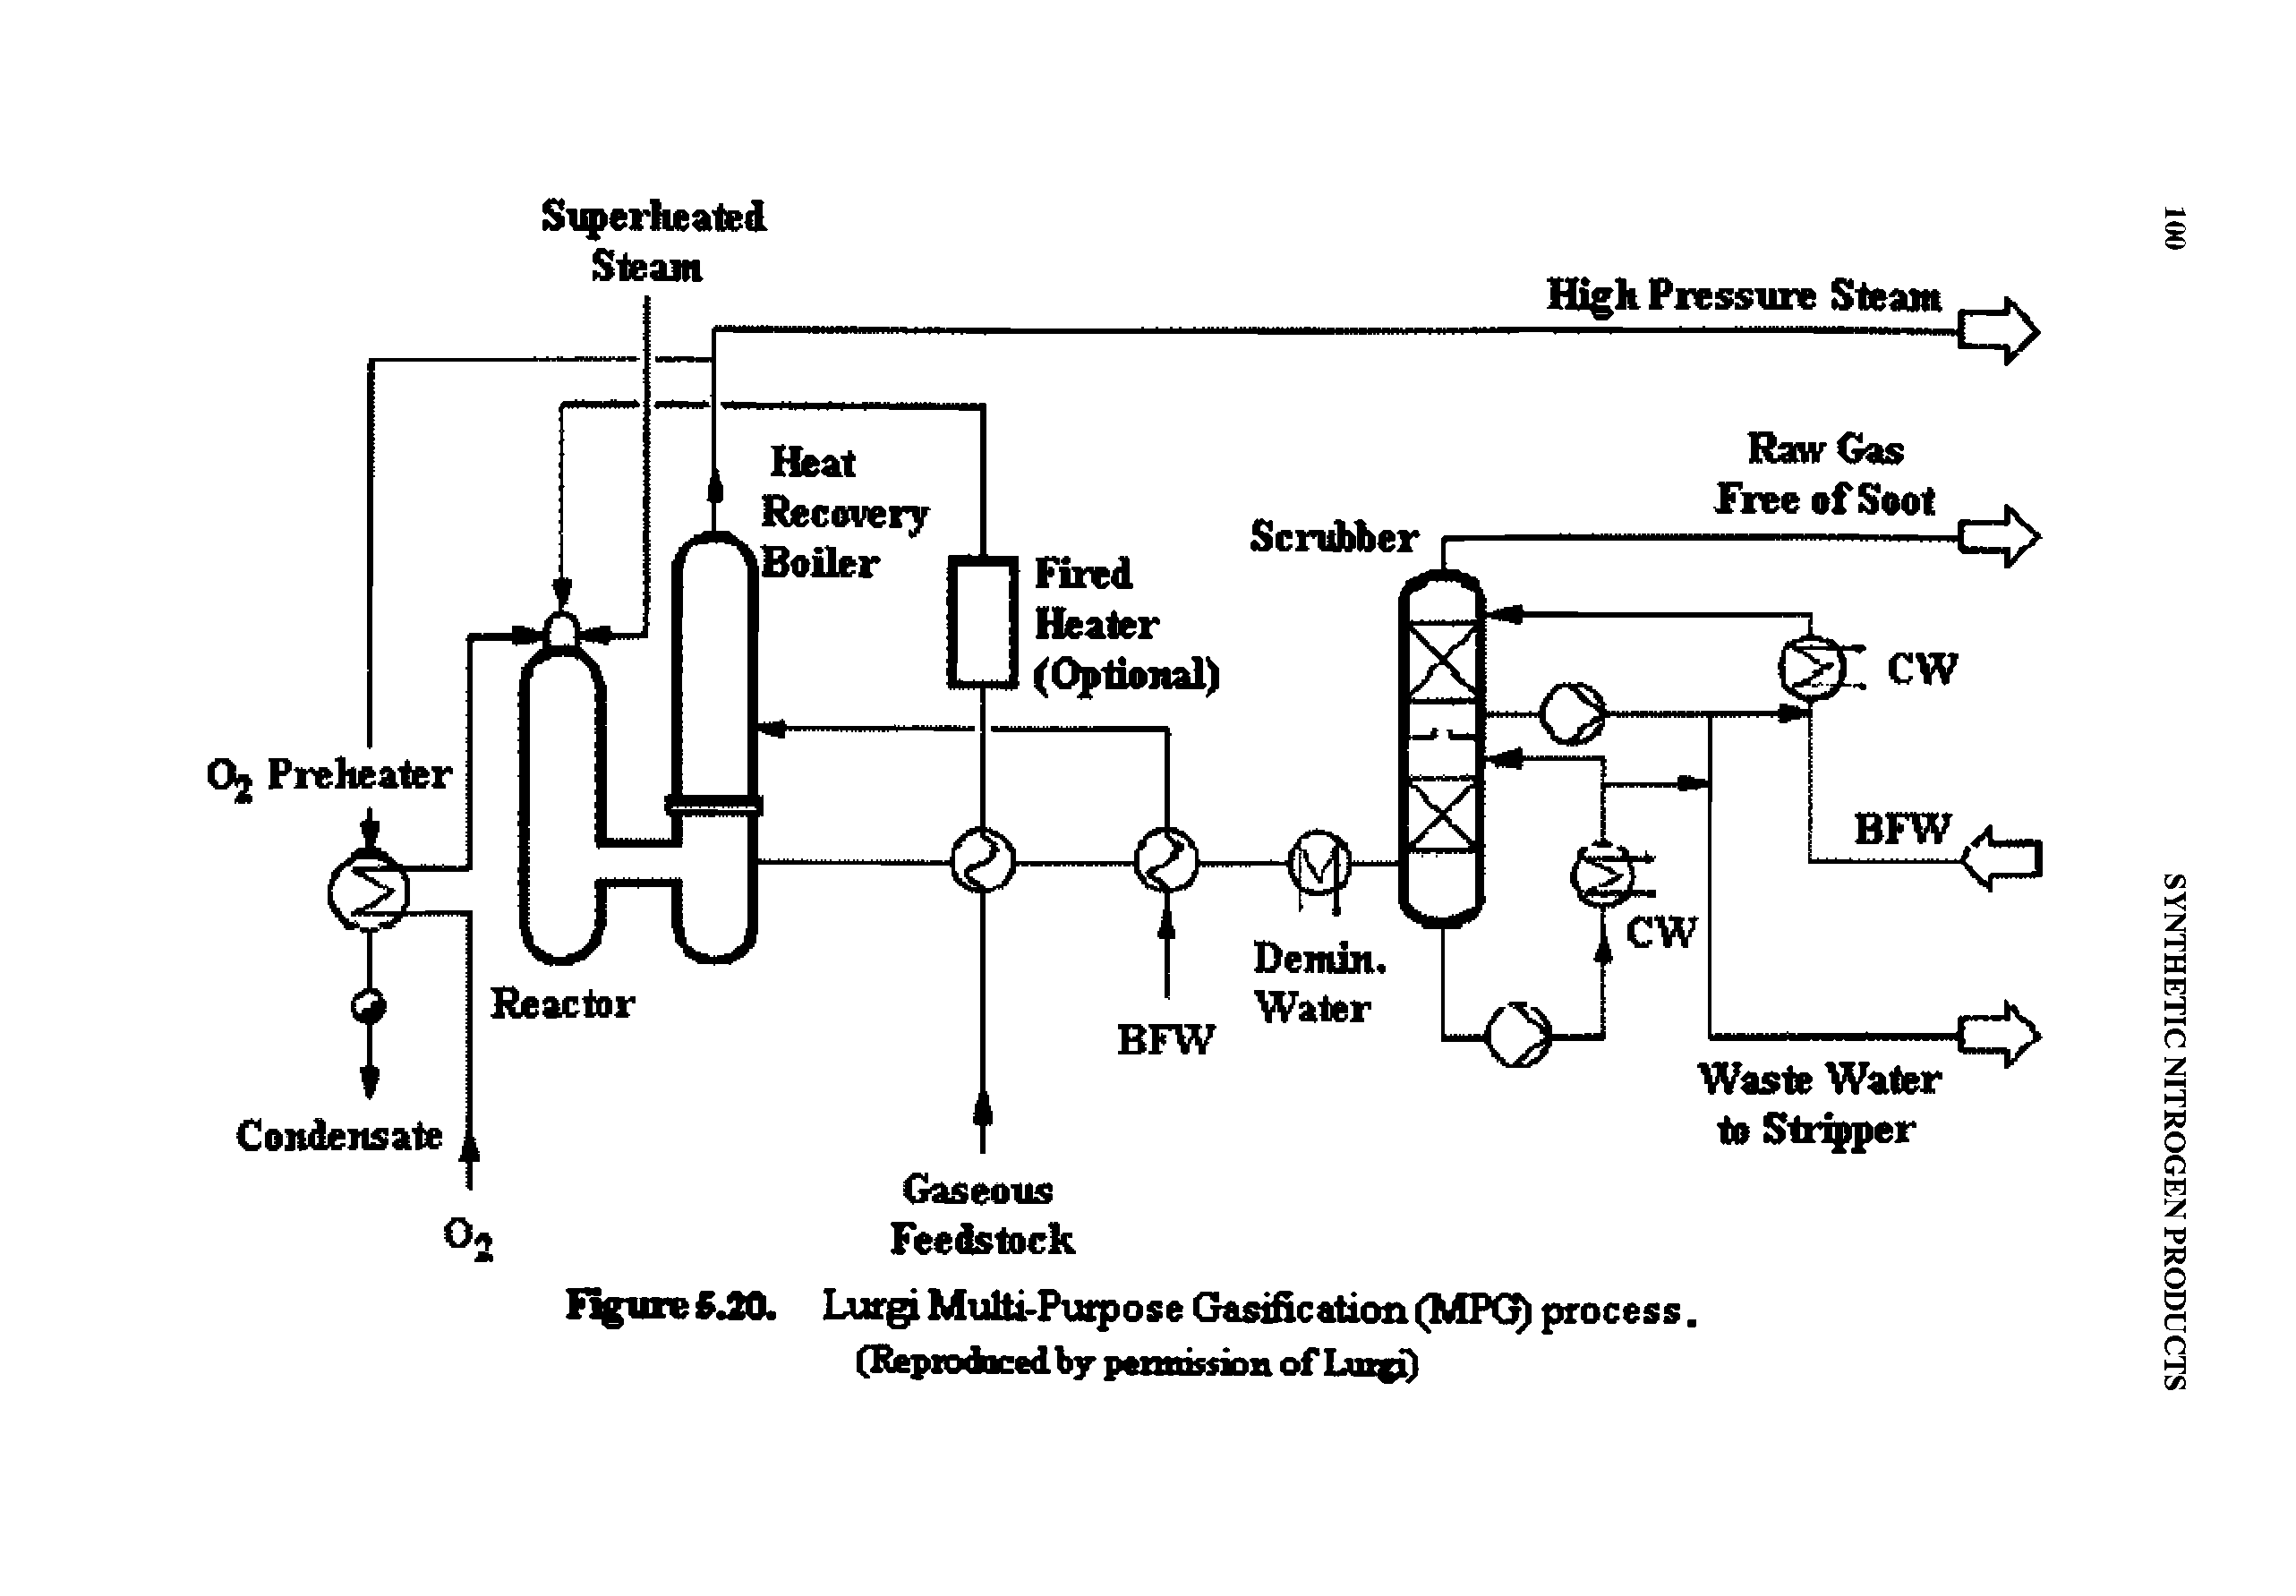 Figure 20. Lurgi Multi-Purpose Gasification (MPG) process. (Reproduced by permission of Luigi)...